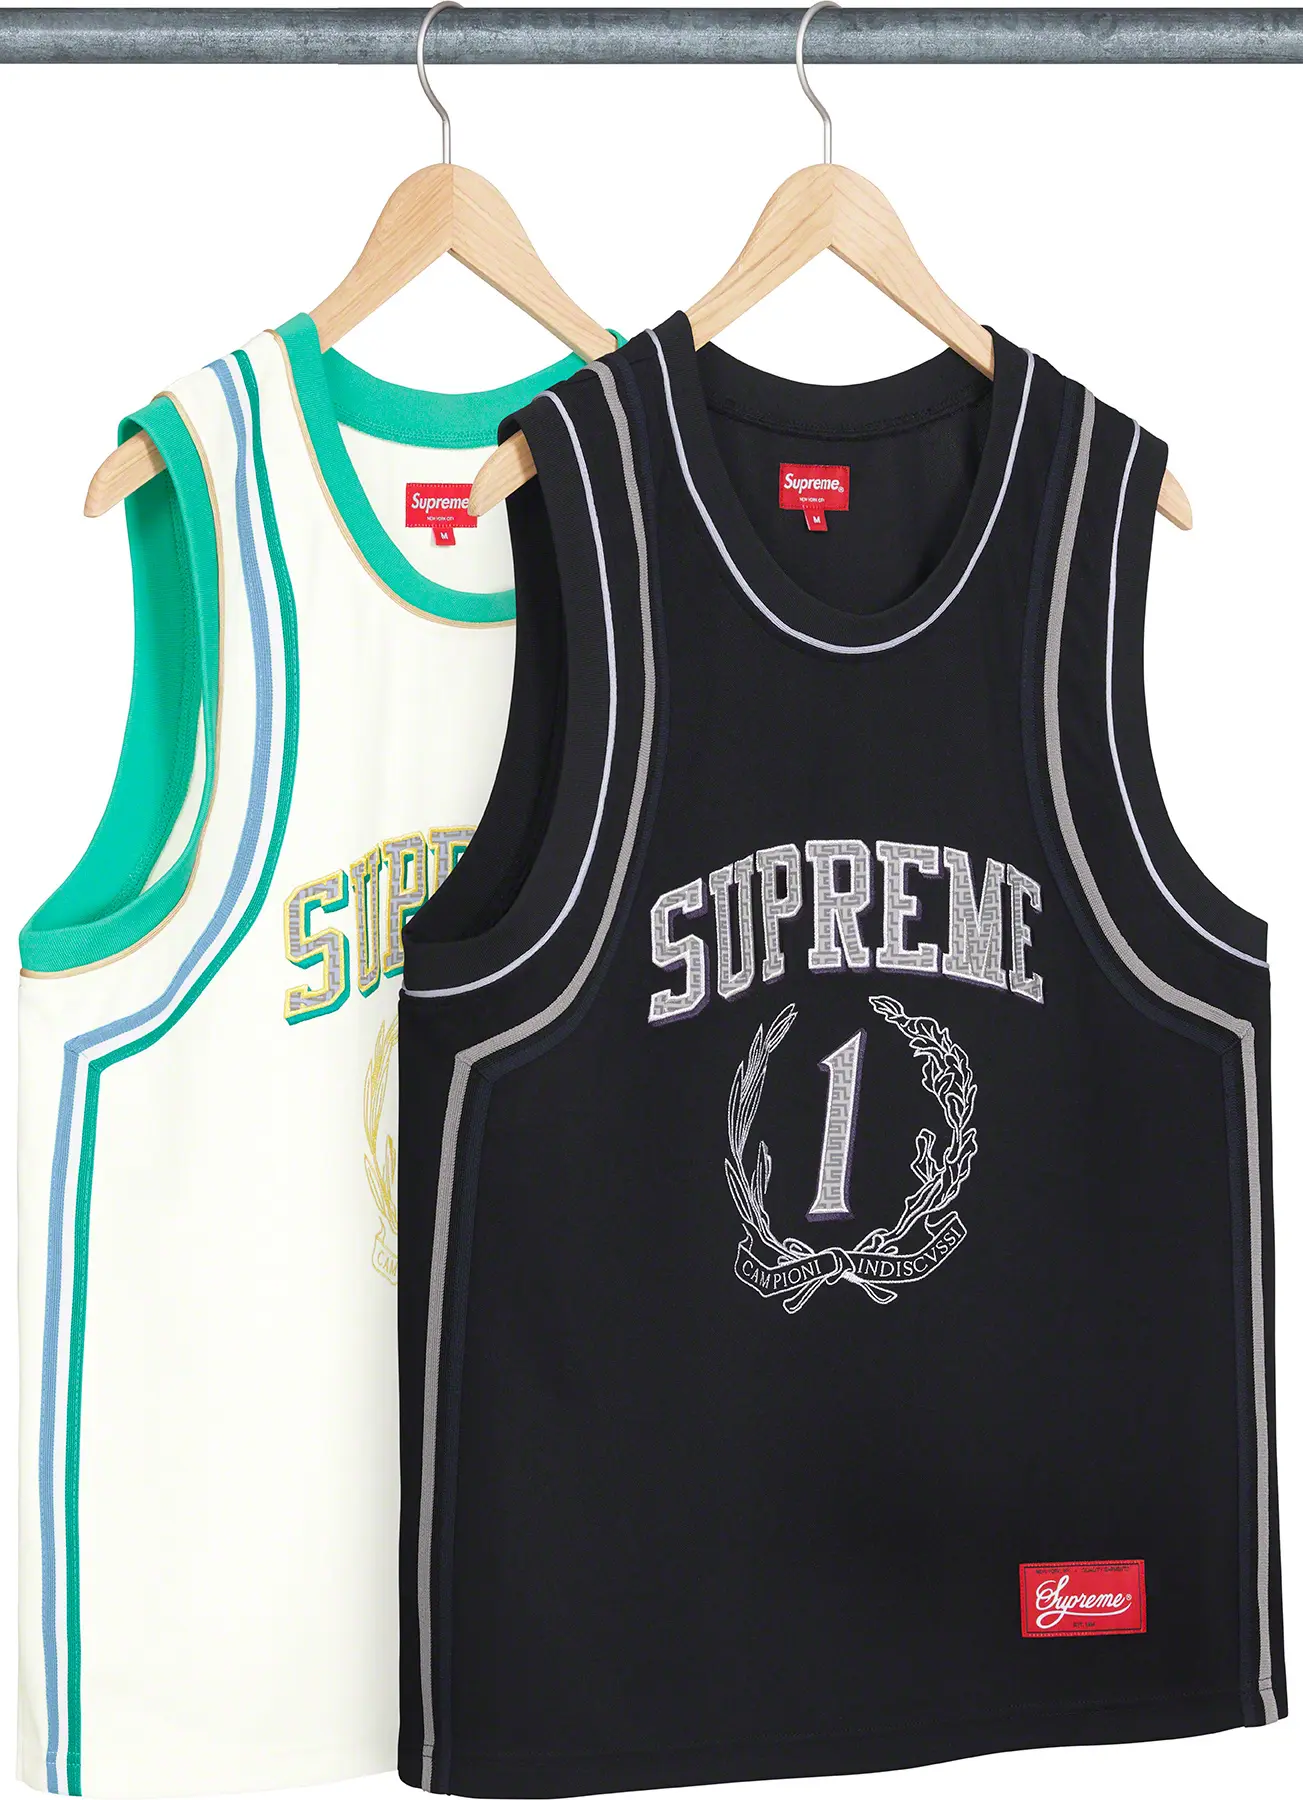 Supreme Campioni Basketball Jersey